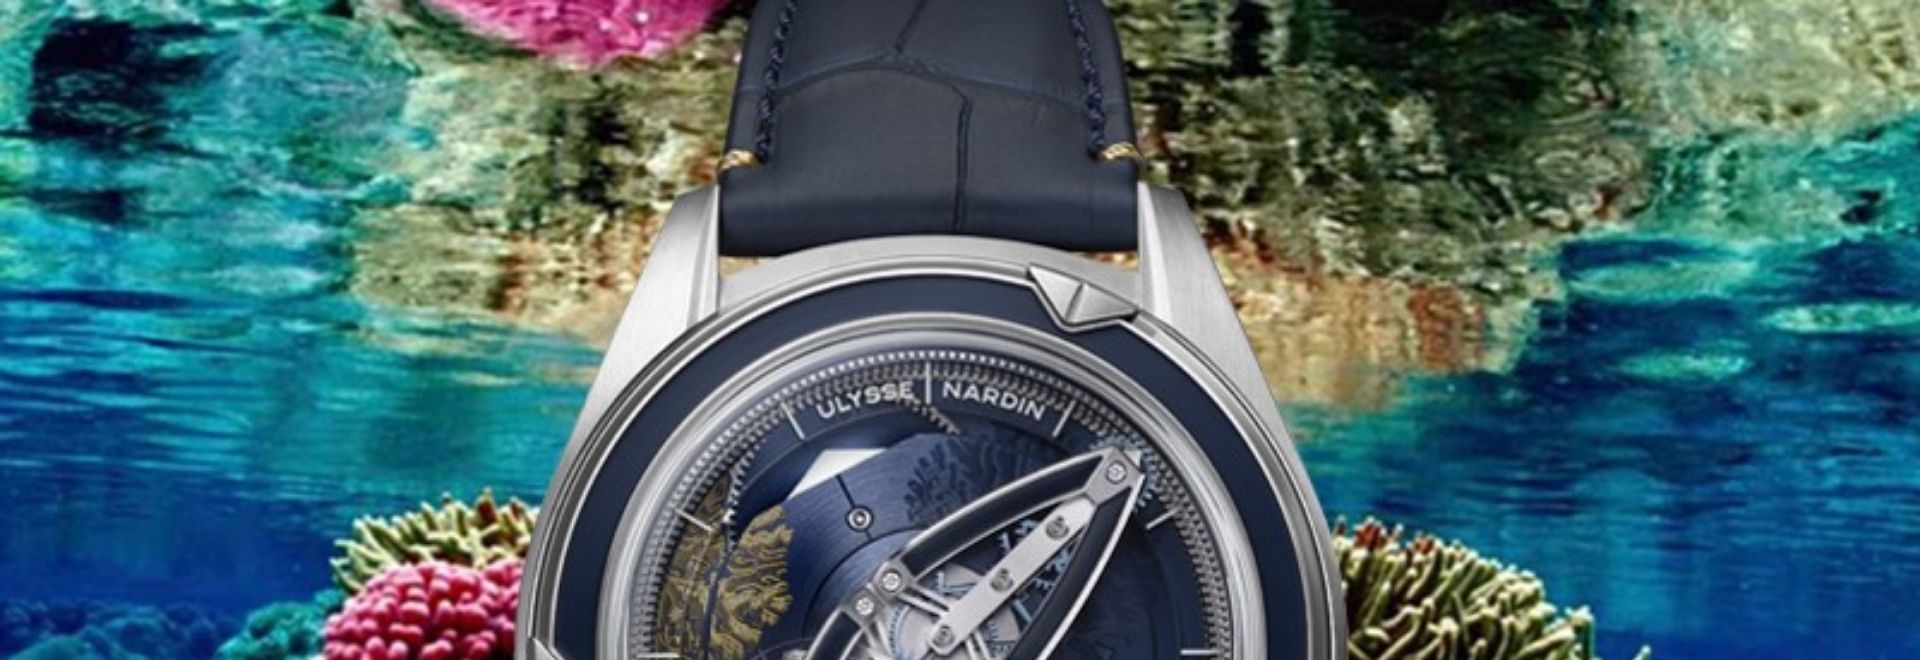 Ulysse Nardin Freak Vision Coral Bay watches - luxury watches